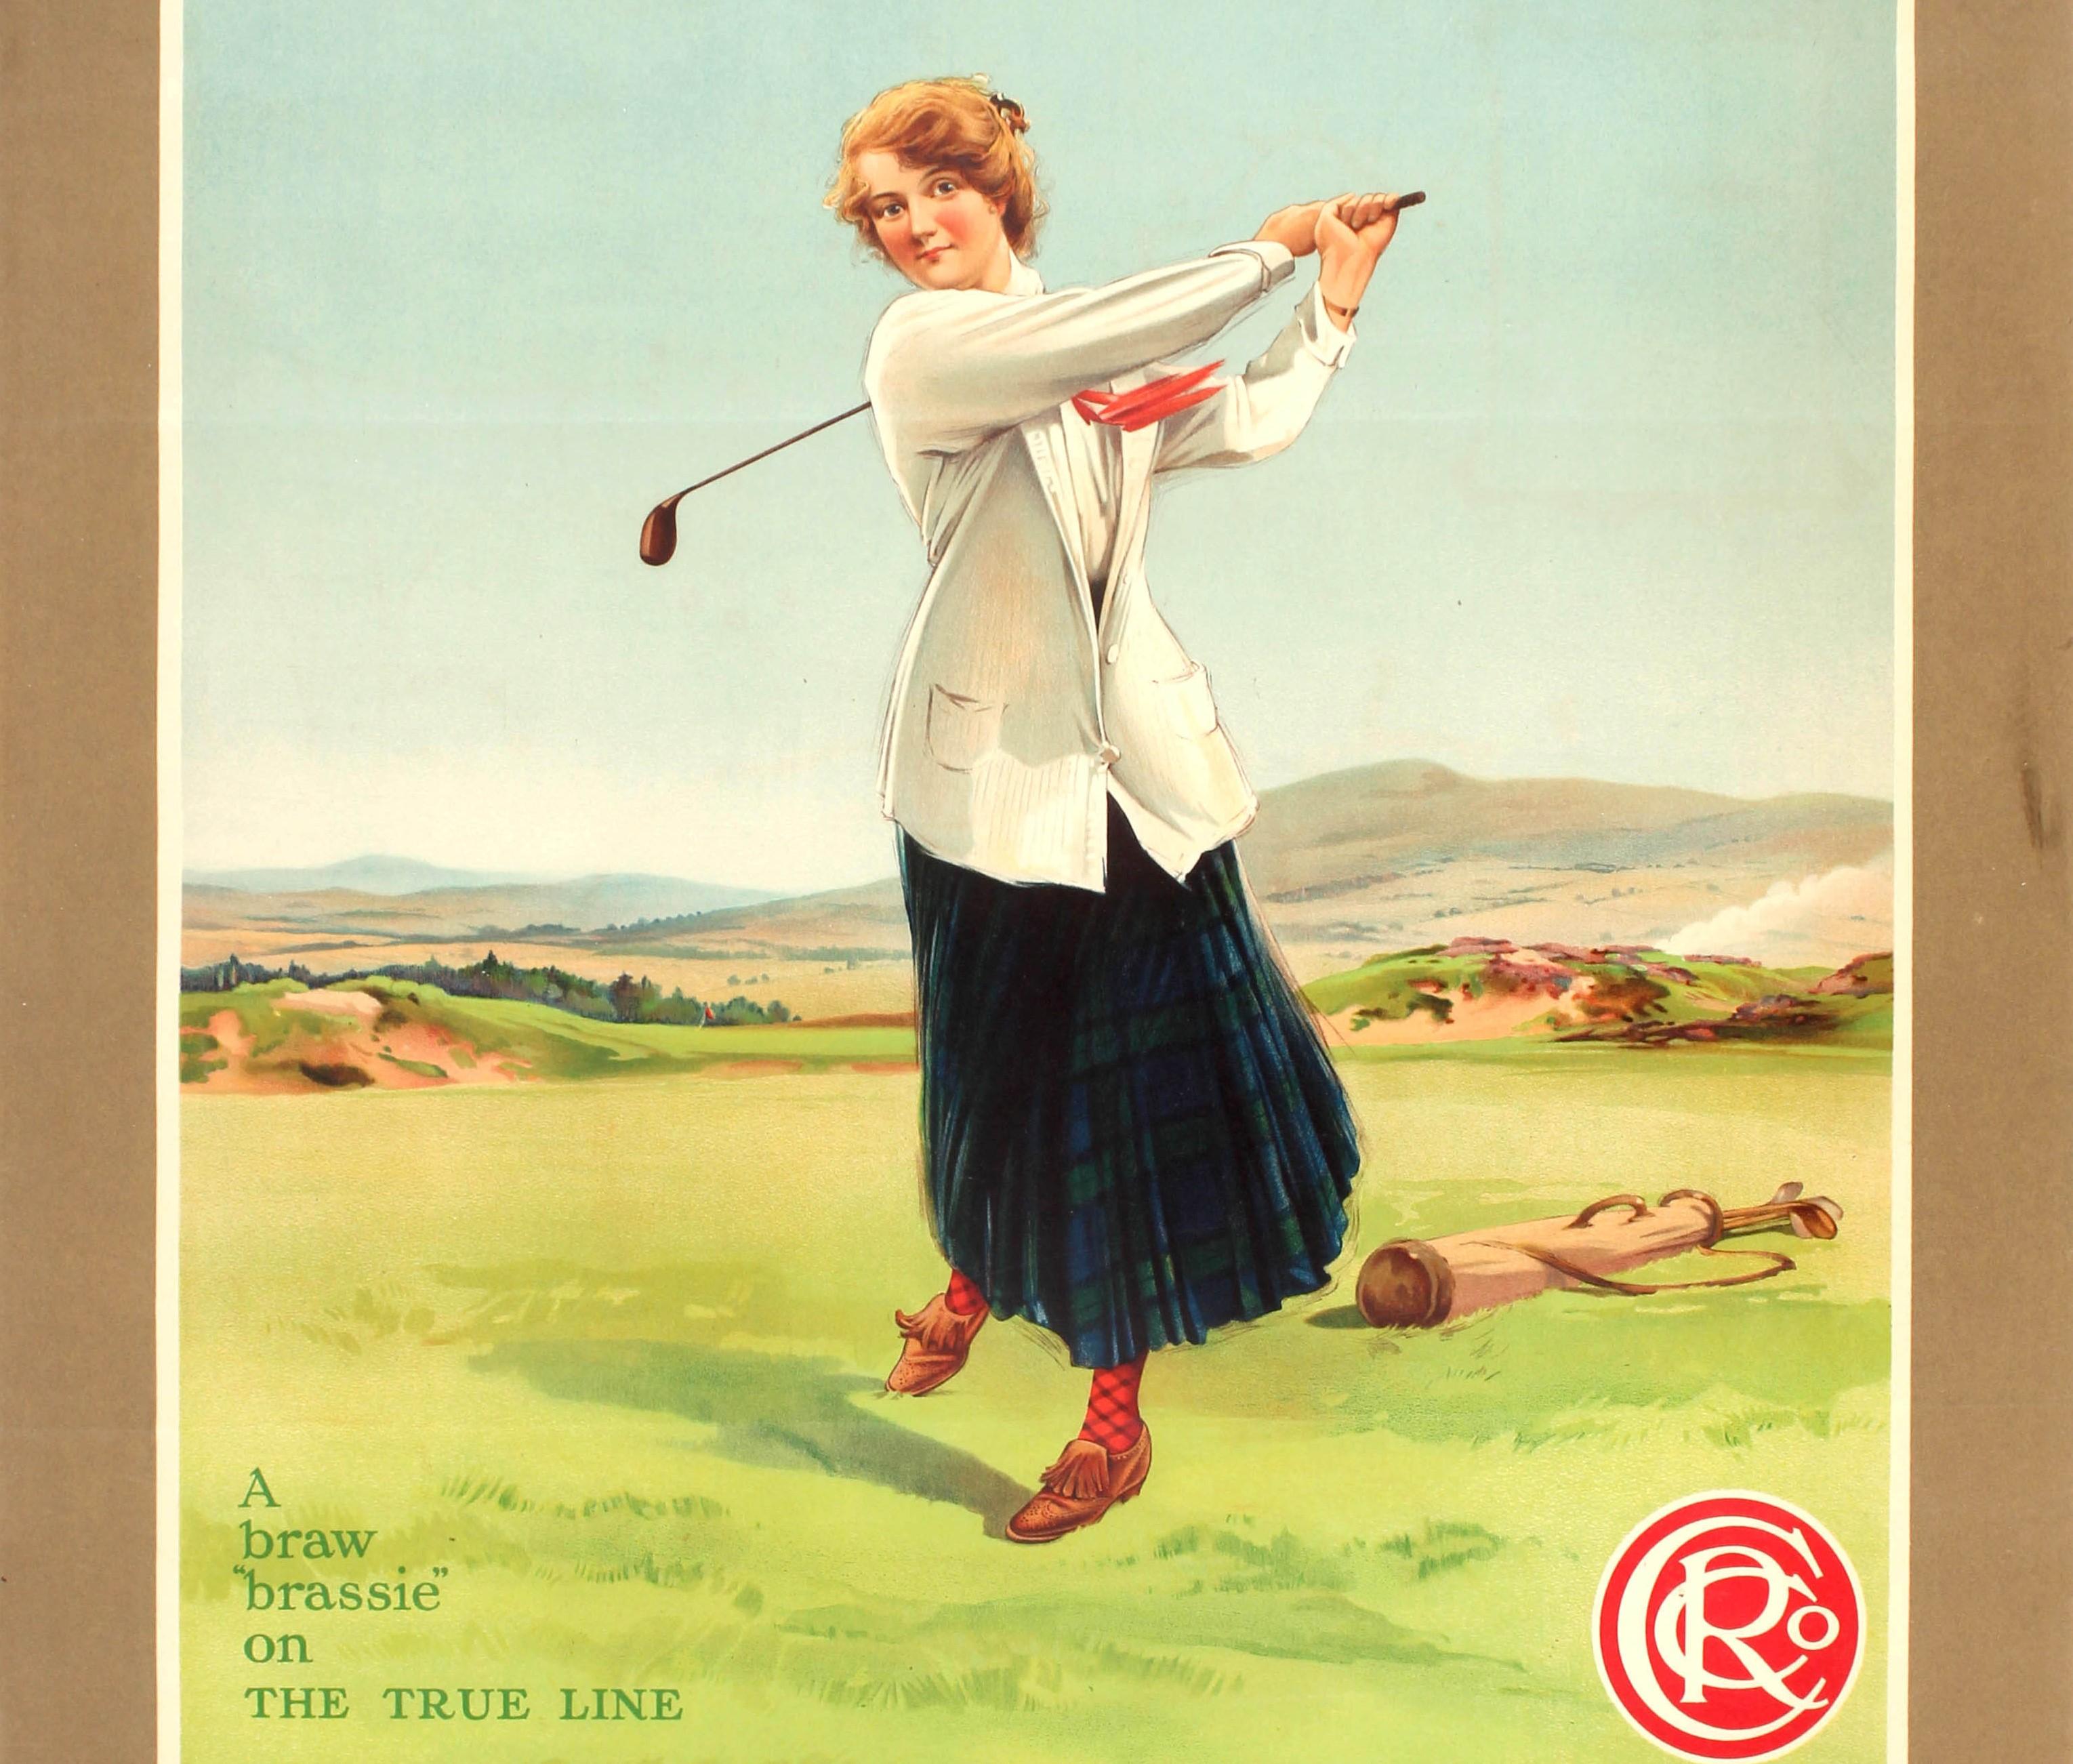 British Original Vintage Caledonian Railway Travel Advertising Poster The Golfing Girl